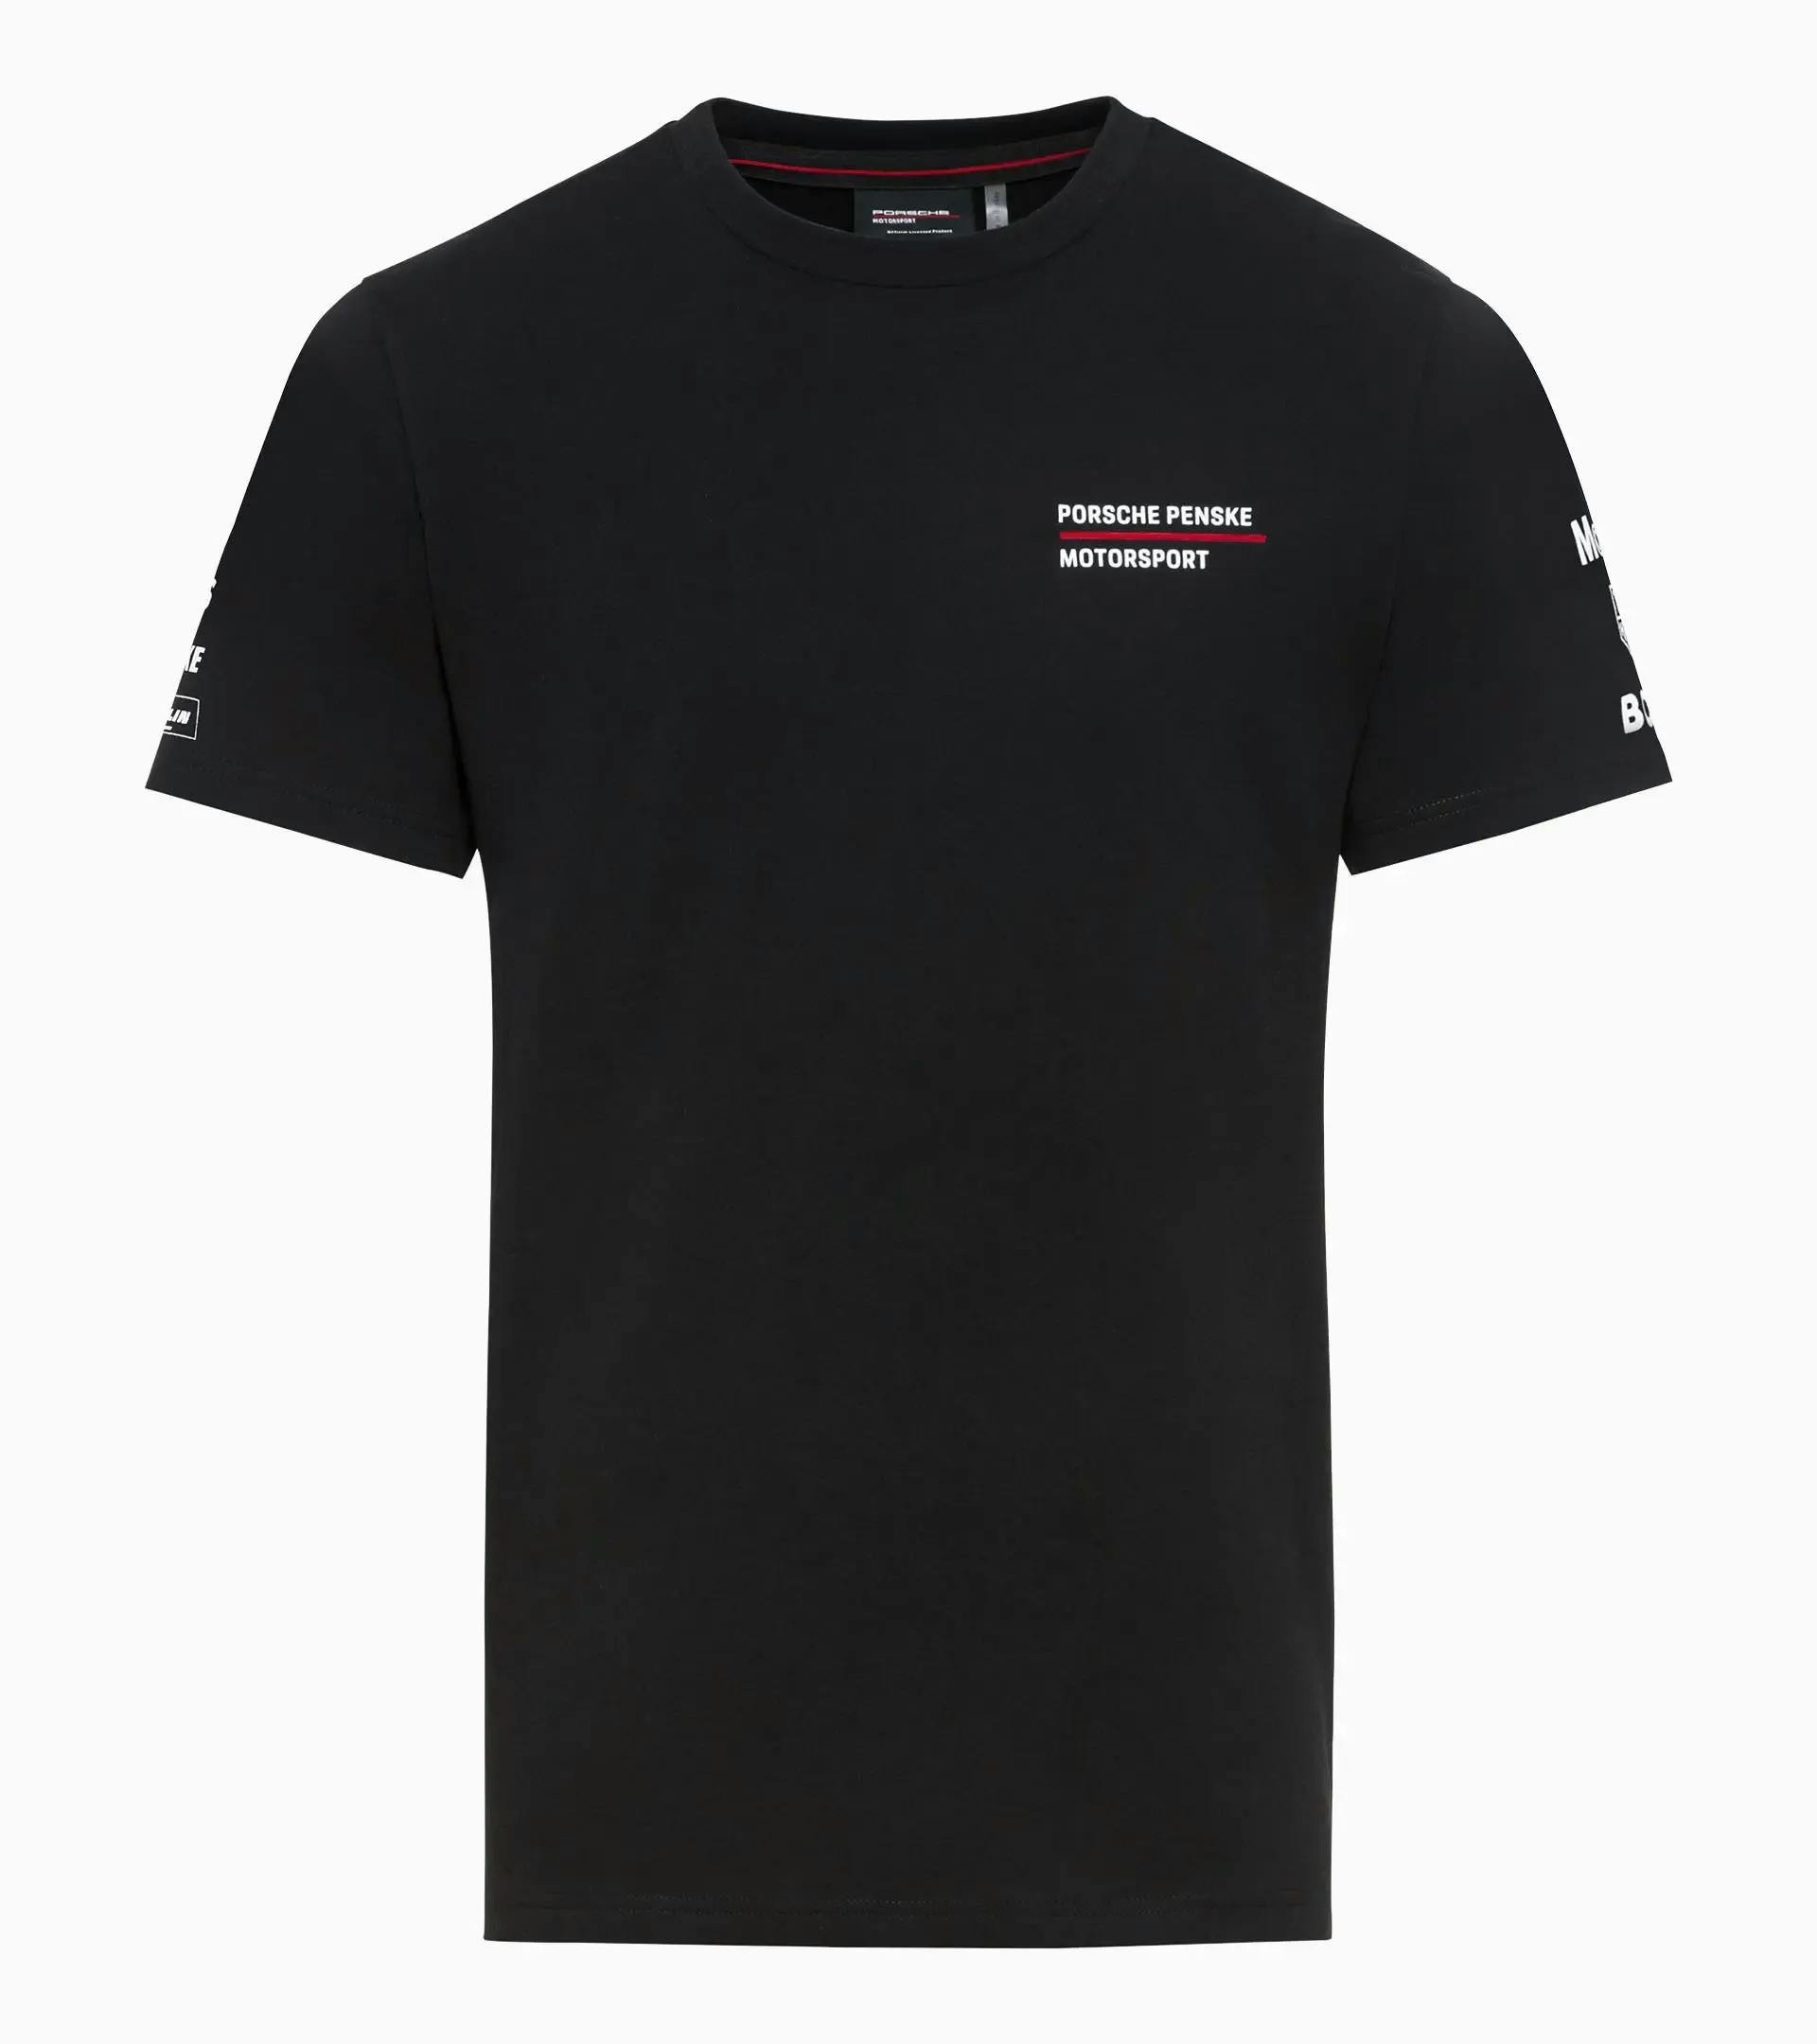 Camiseta unisex – Porsche Penske Motorsport 1